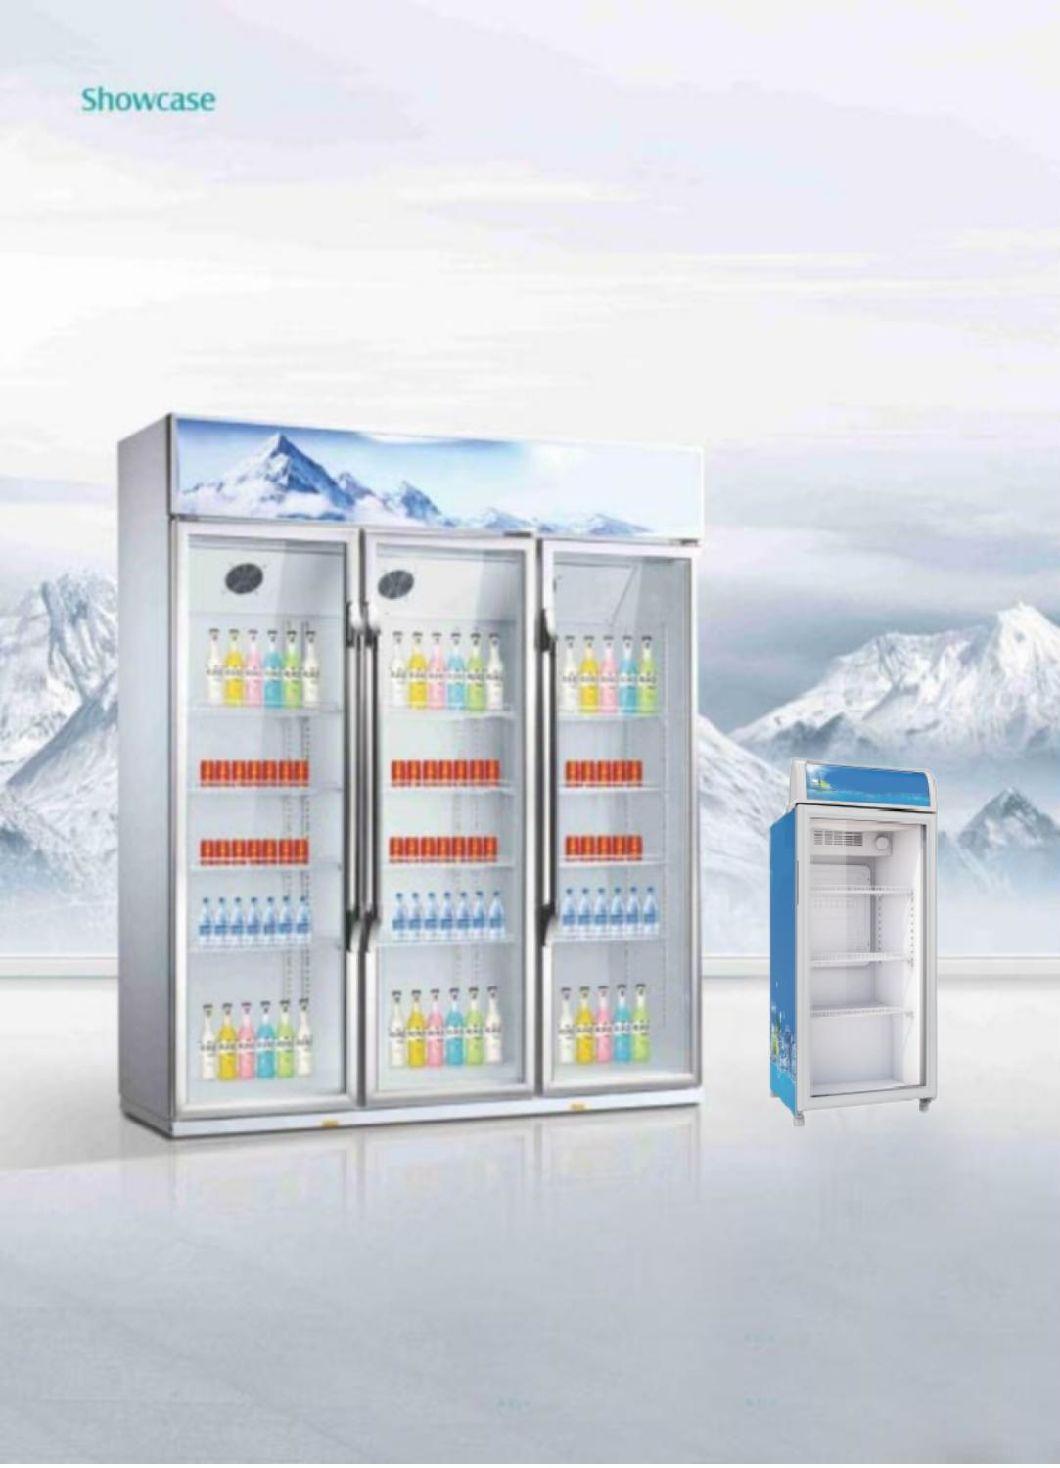 Soft Drink Glass Door Commercial Refrigerator, Upright Showcase/ Refrigerators, China Made